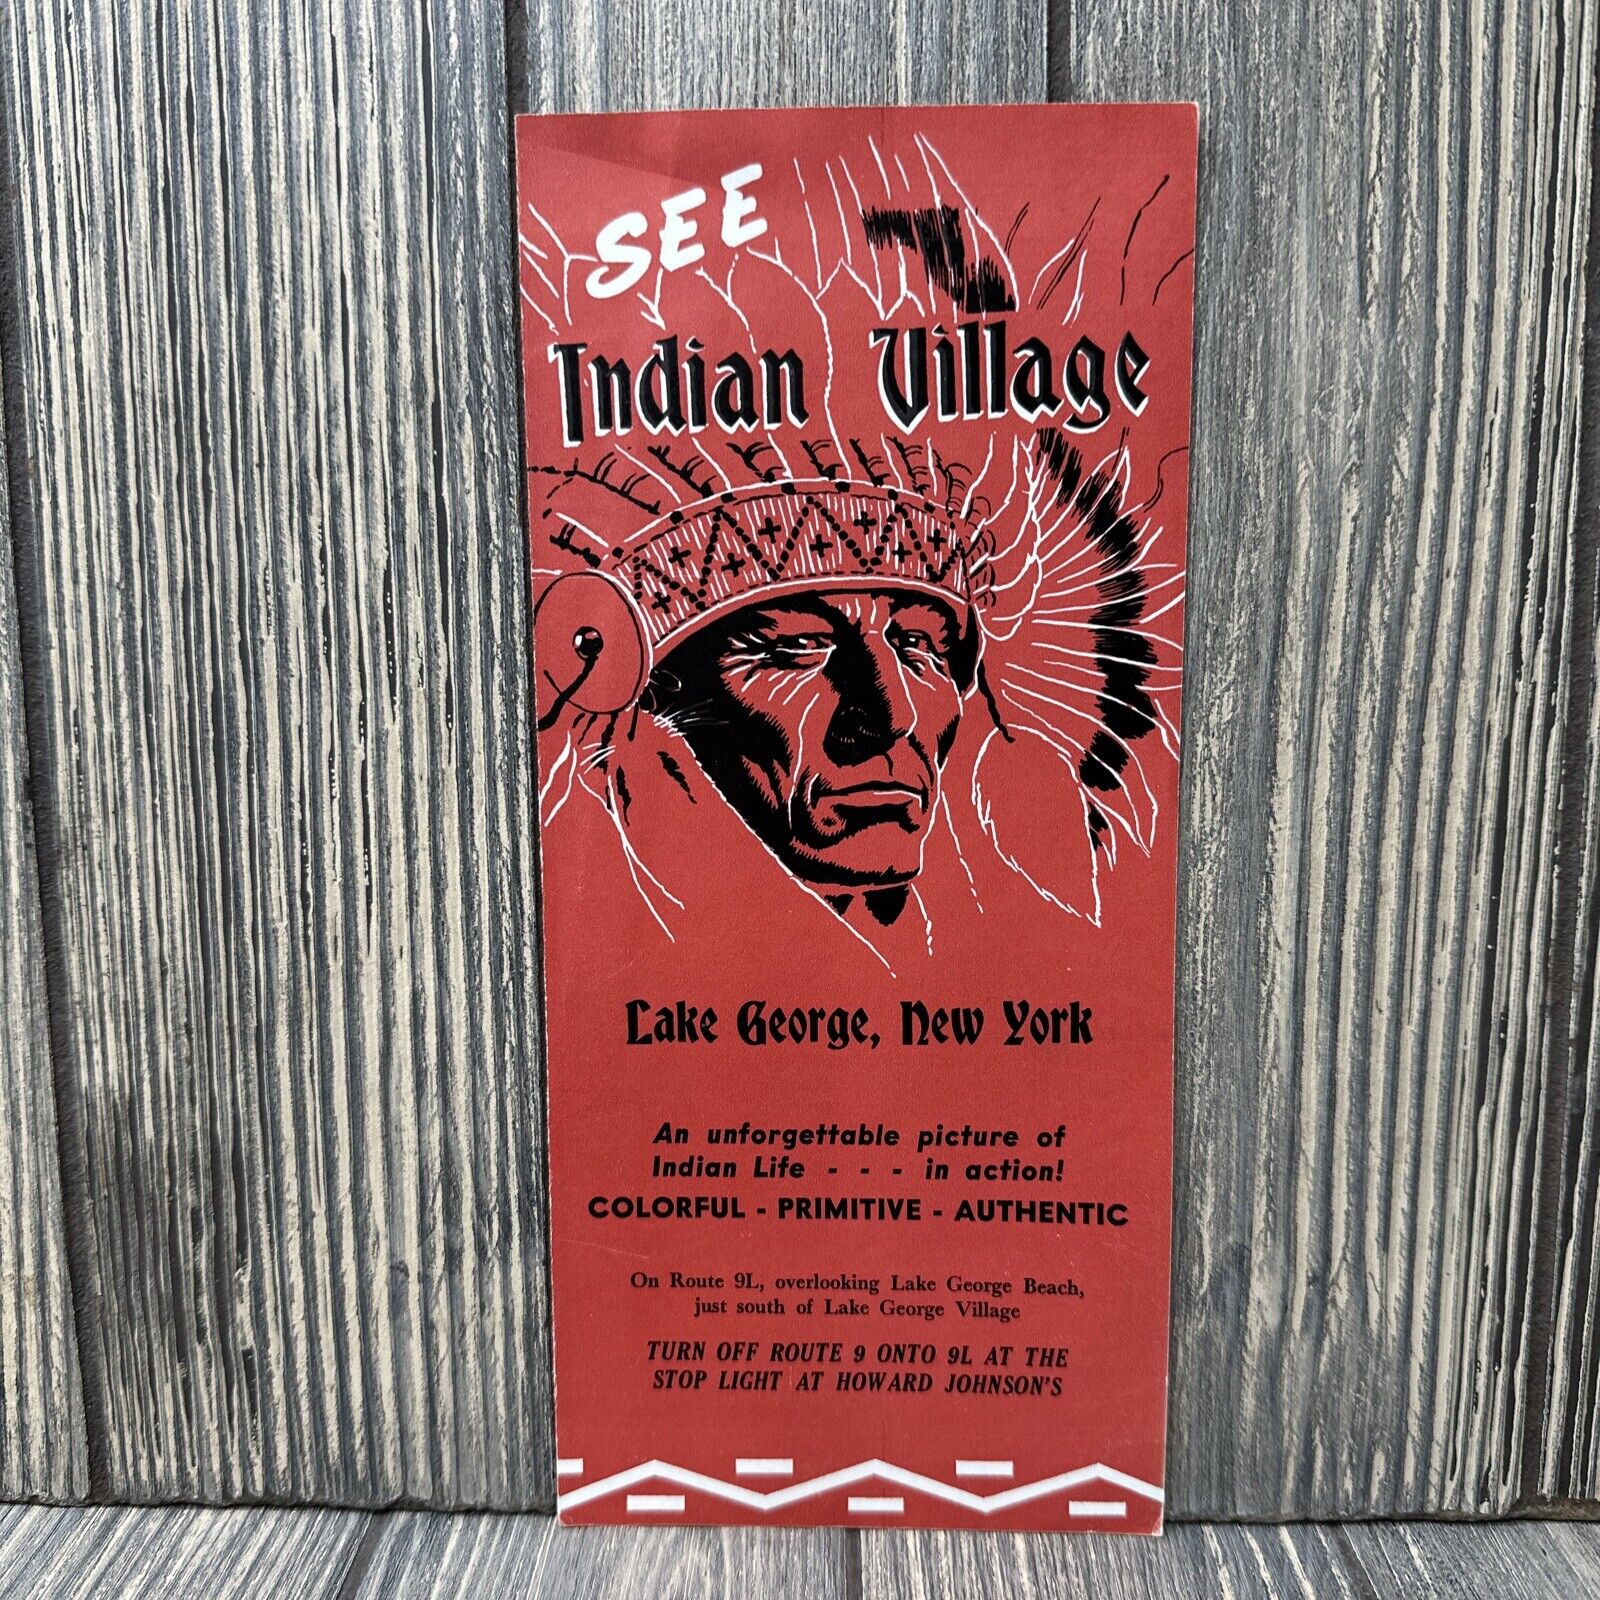 Vintage Indian Village Lage George NY Brochure